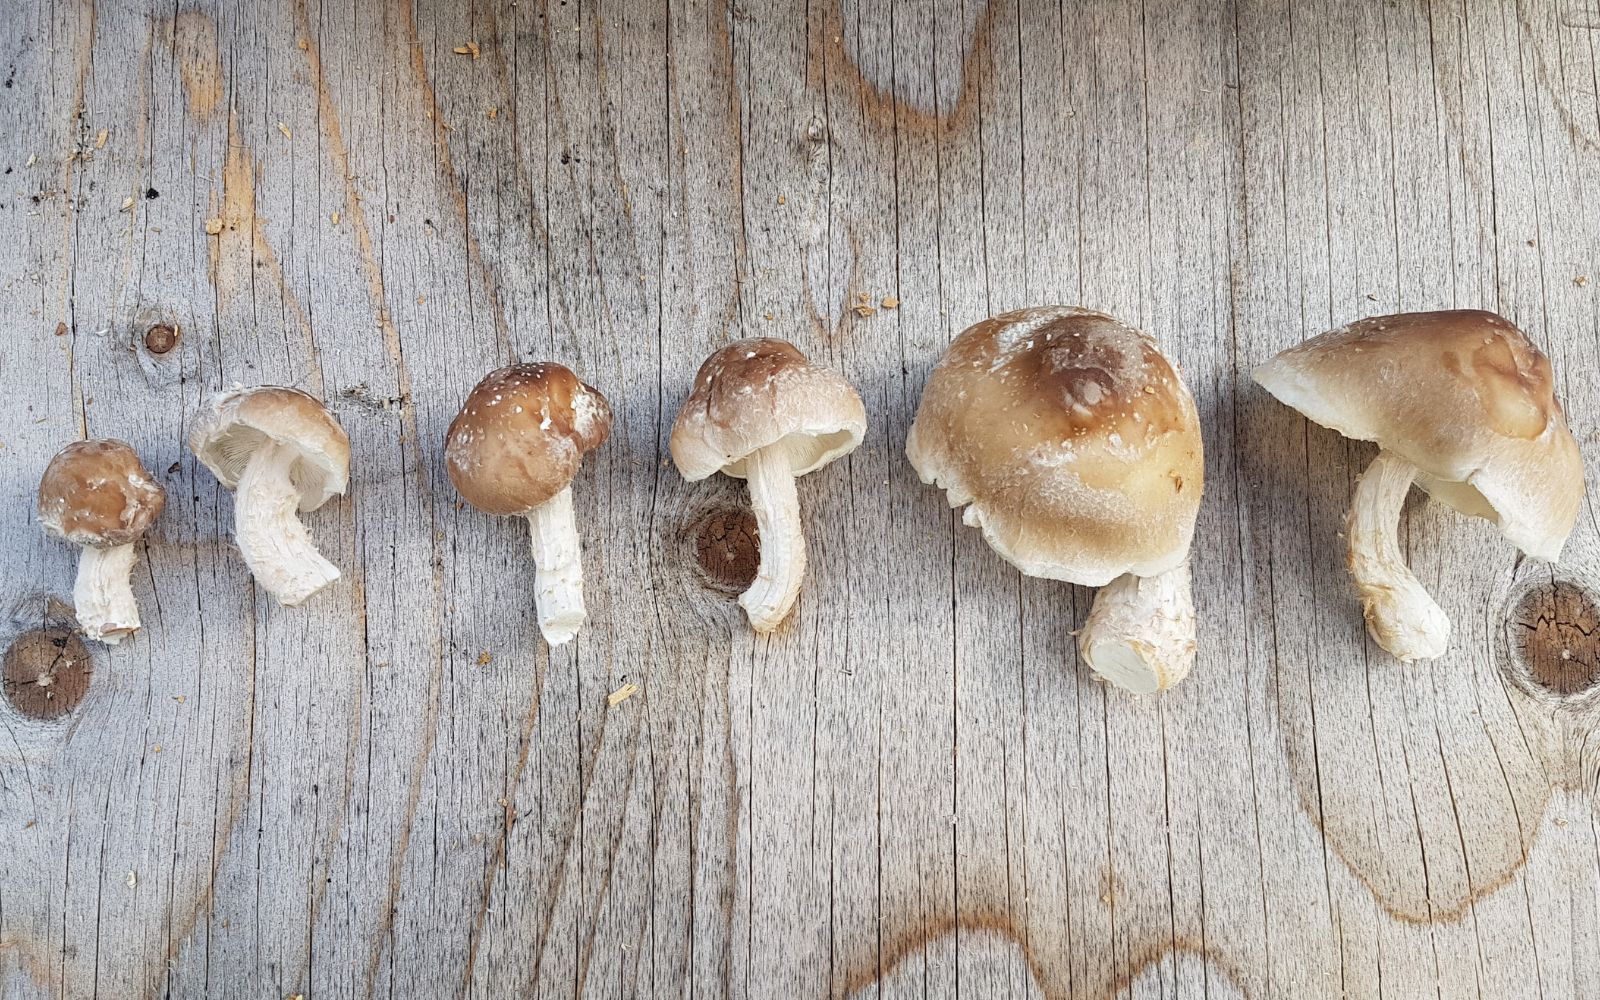 The Complete Guide To Starting A Mushroom Farm - FreshCap Mushrooms